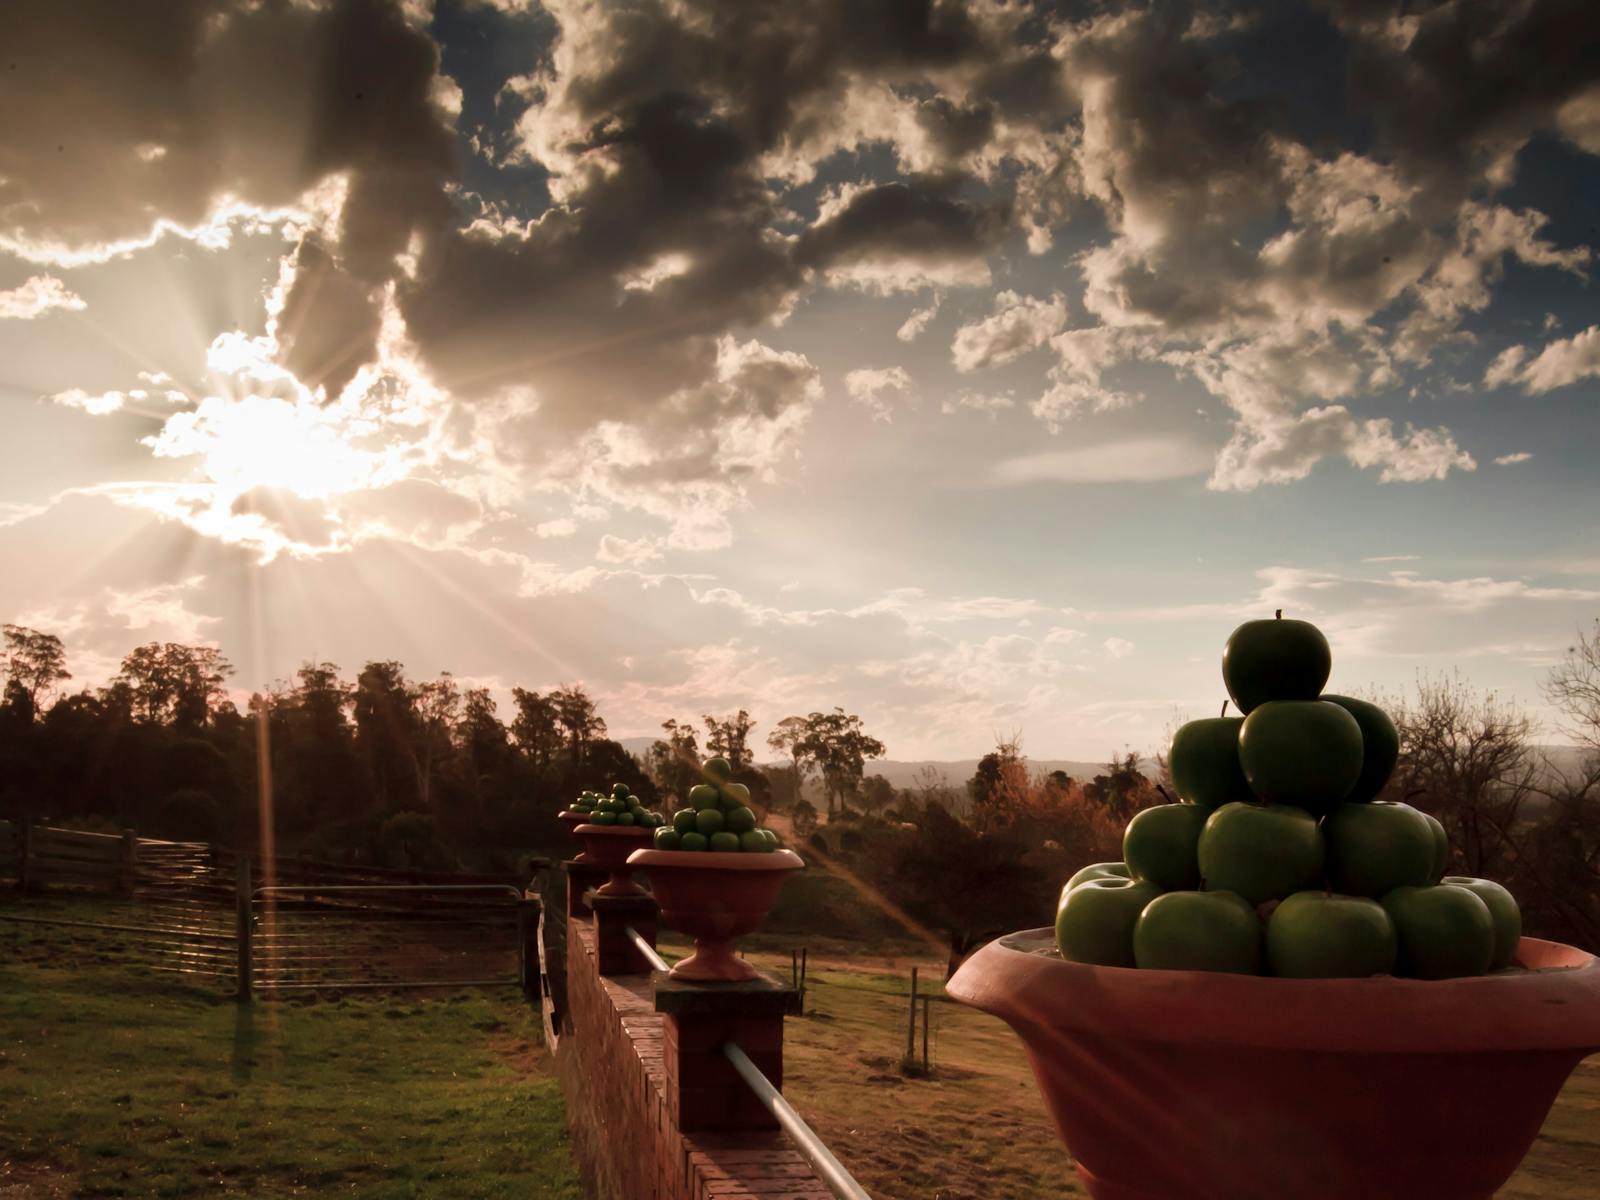 Apples on the Barnyard Fence